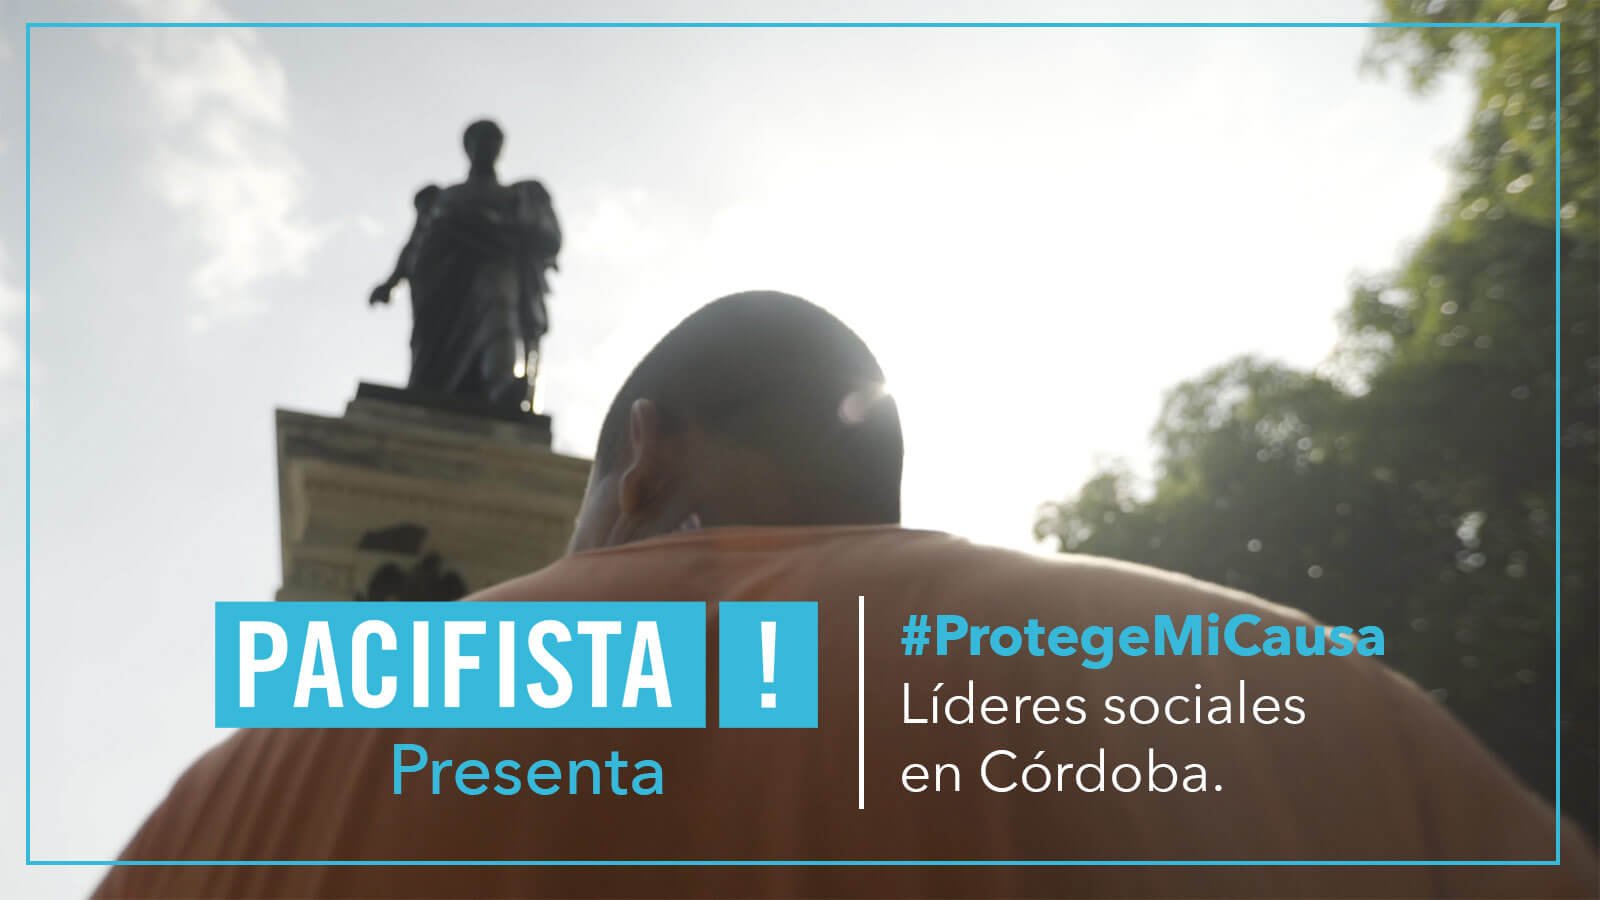 ¡Pacifista! Presenta: #ProtegeMiCausa Líderes sociales en Córdoba